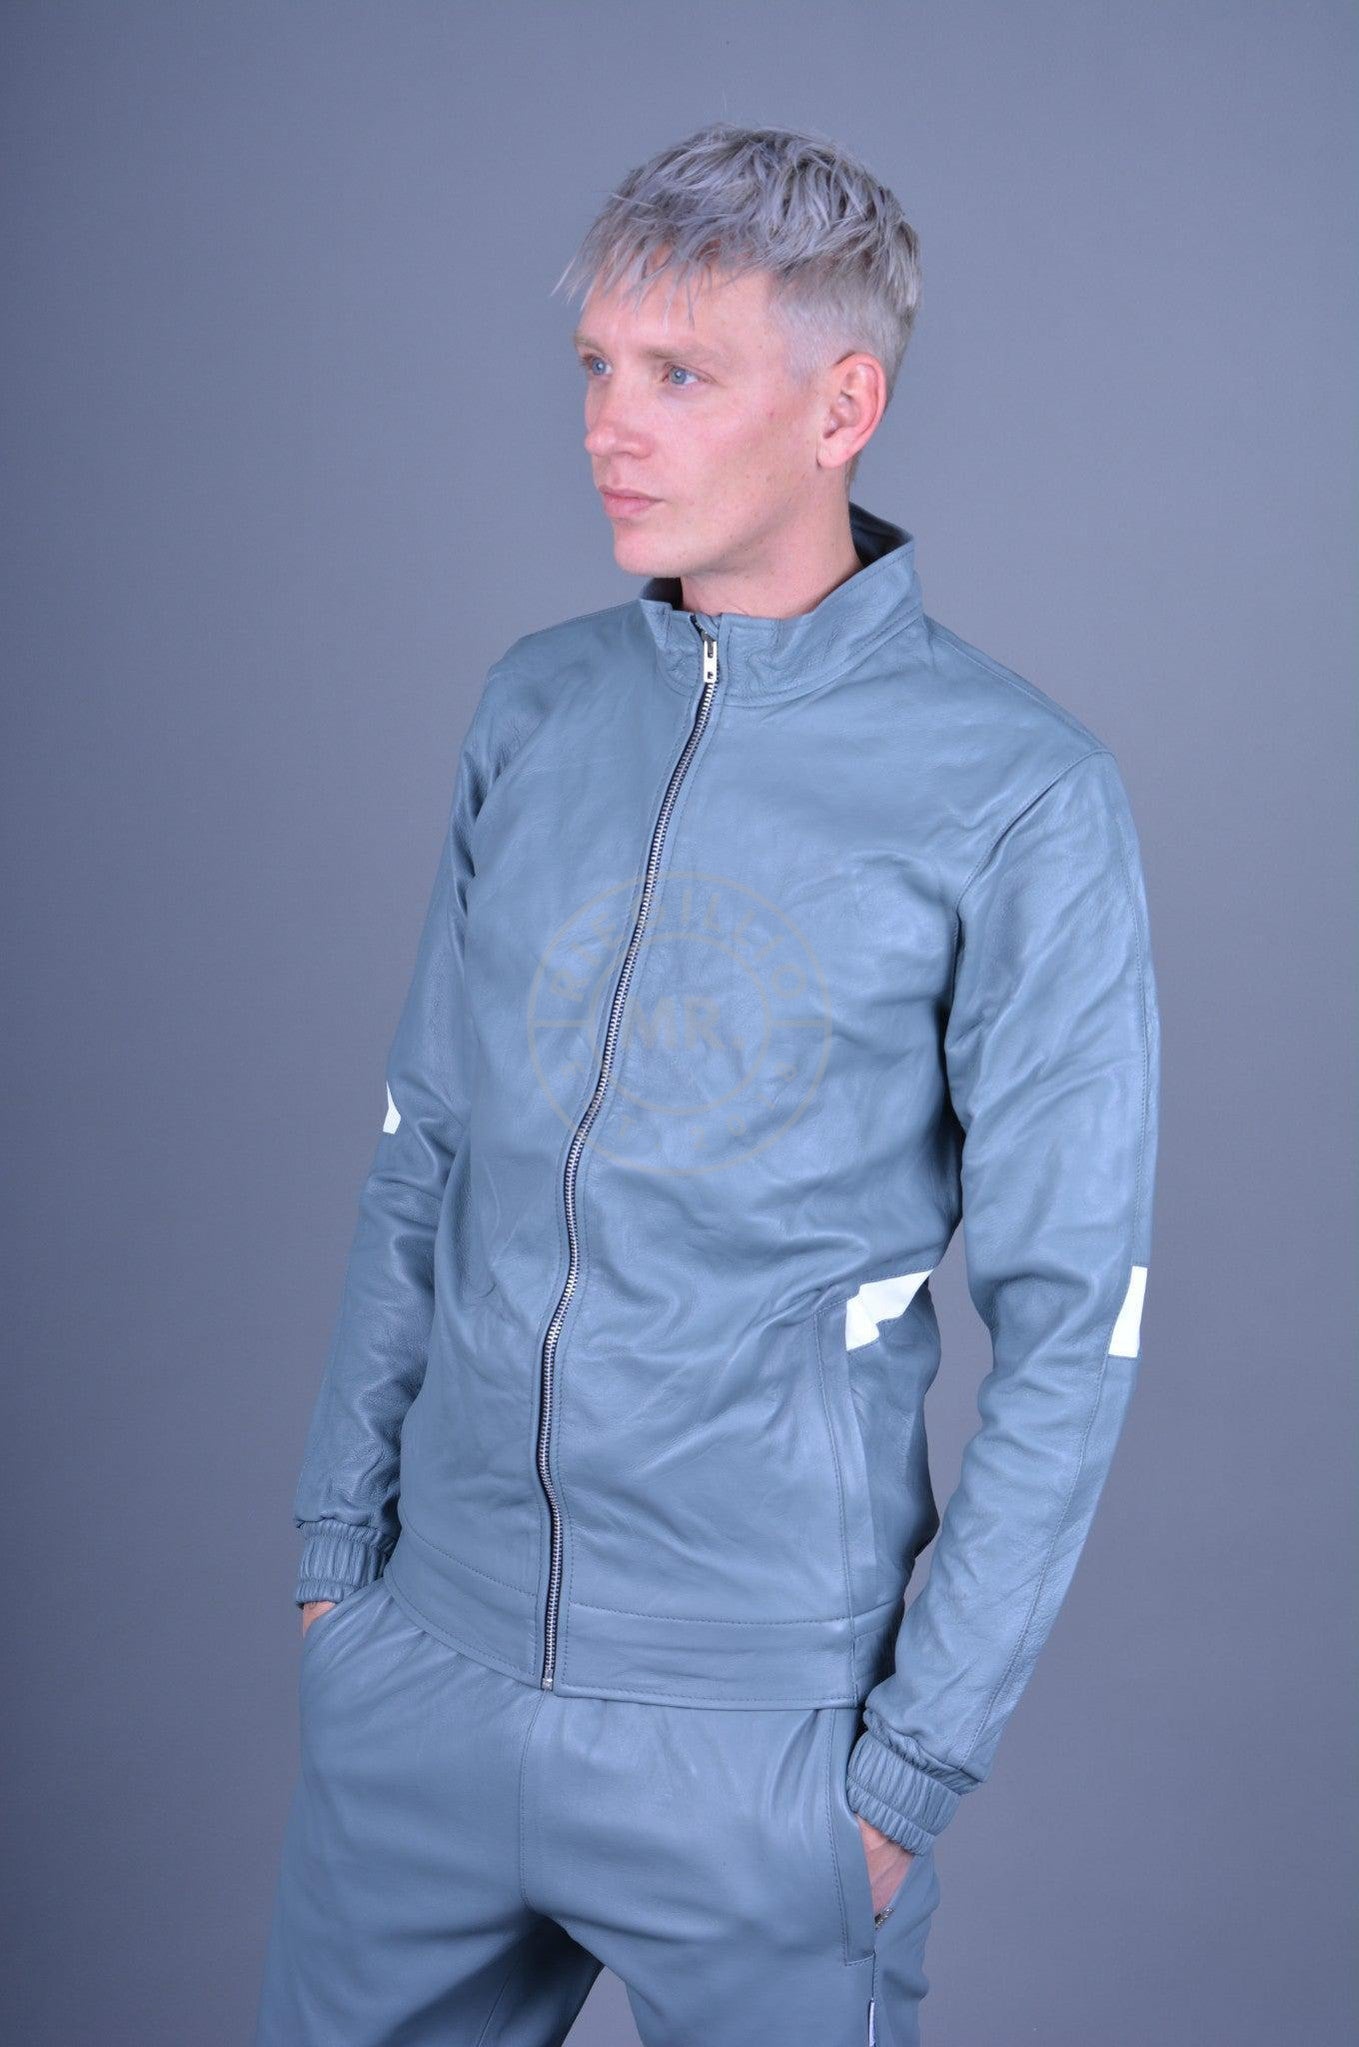 Slate Grey Leather Tracksuit Jacket *DISCONTINUED ITEM*-at MR. Riegillio